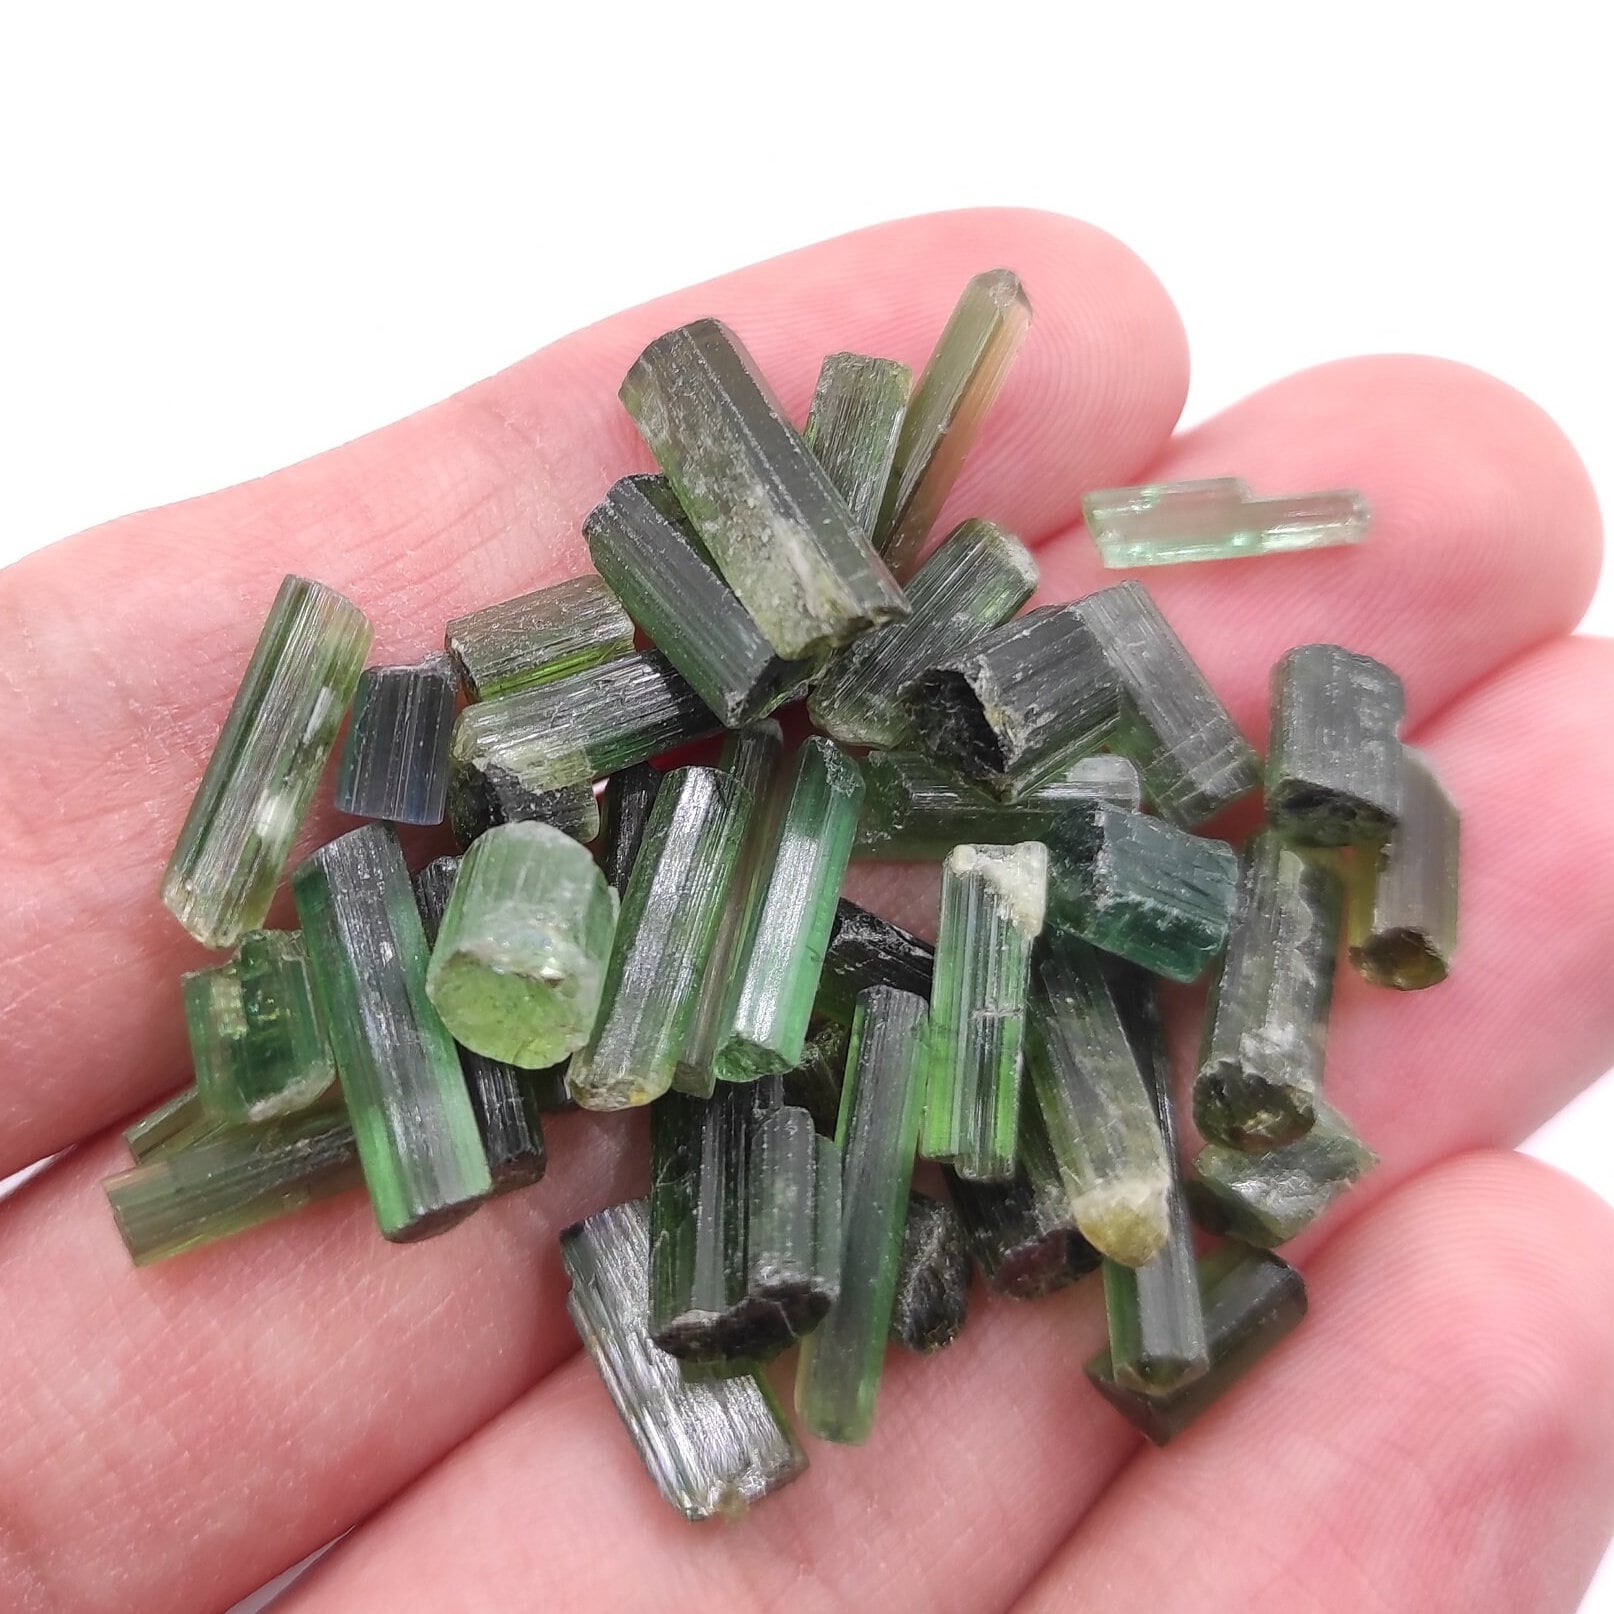 58ct Green Tourmaline Lot - Tourmaline Sticks - Raw Green Tourmaline Crystals - Loose Gemstones - Rough Tourmalines Gemstones - Afghanistan